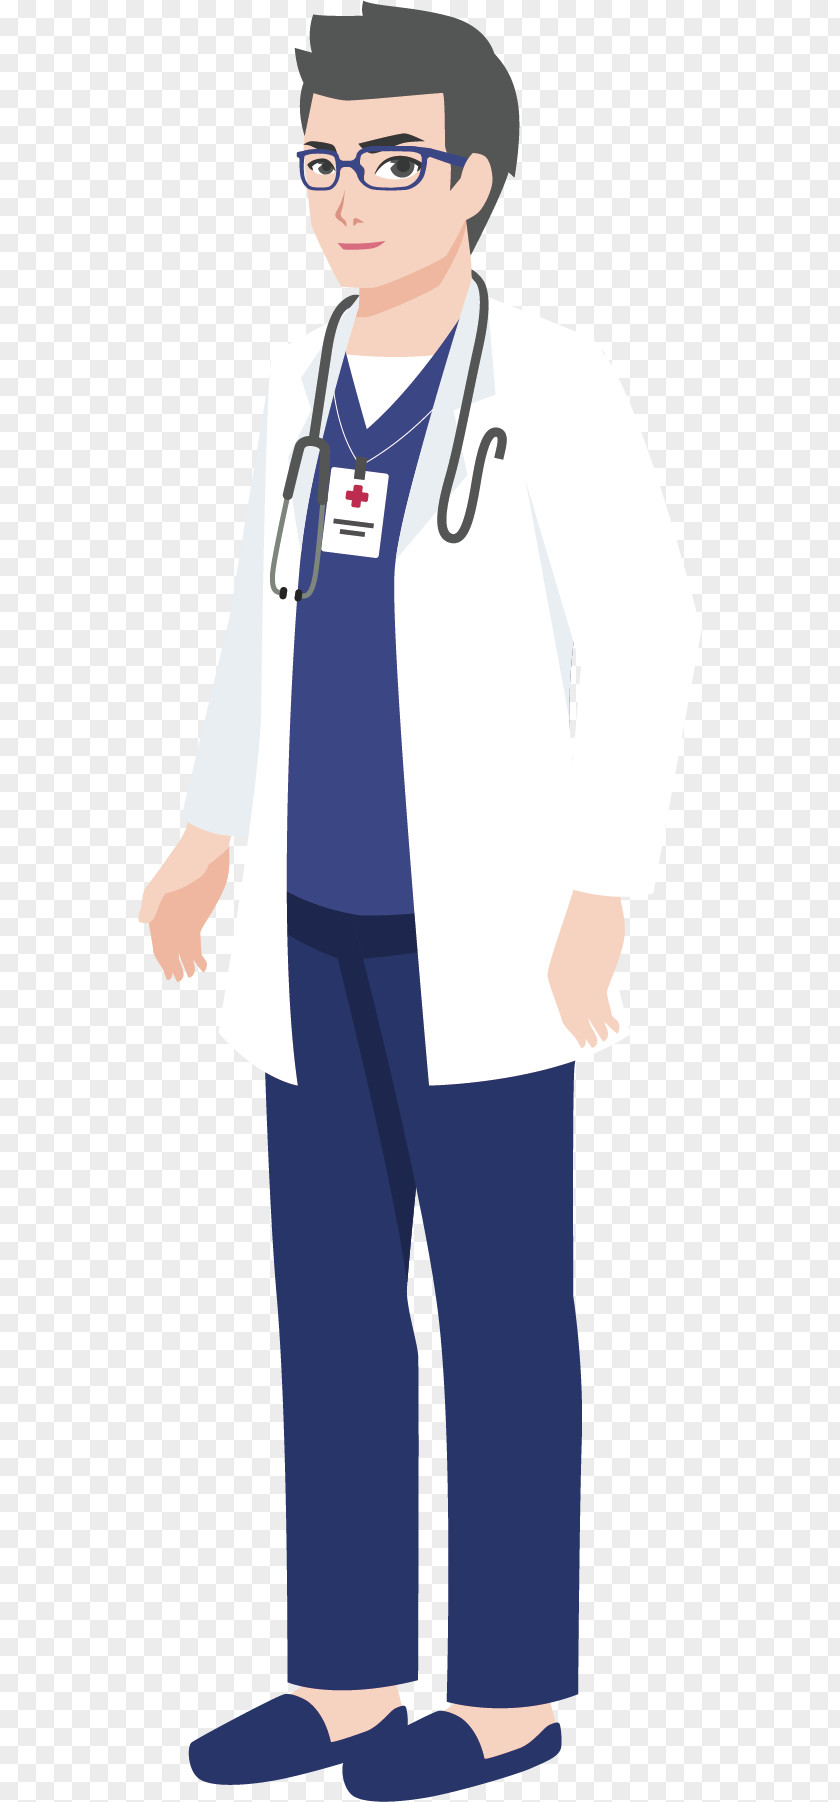 University Doctor Cartoon Physician Illustration PNG